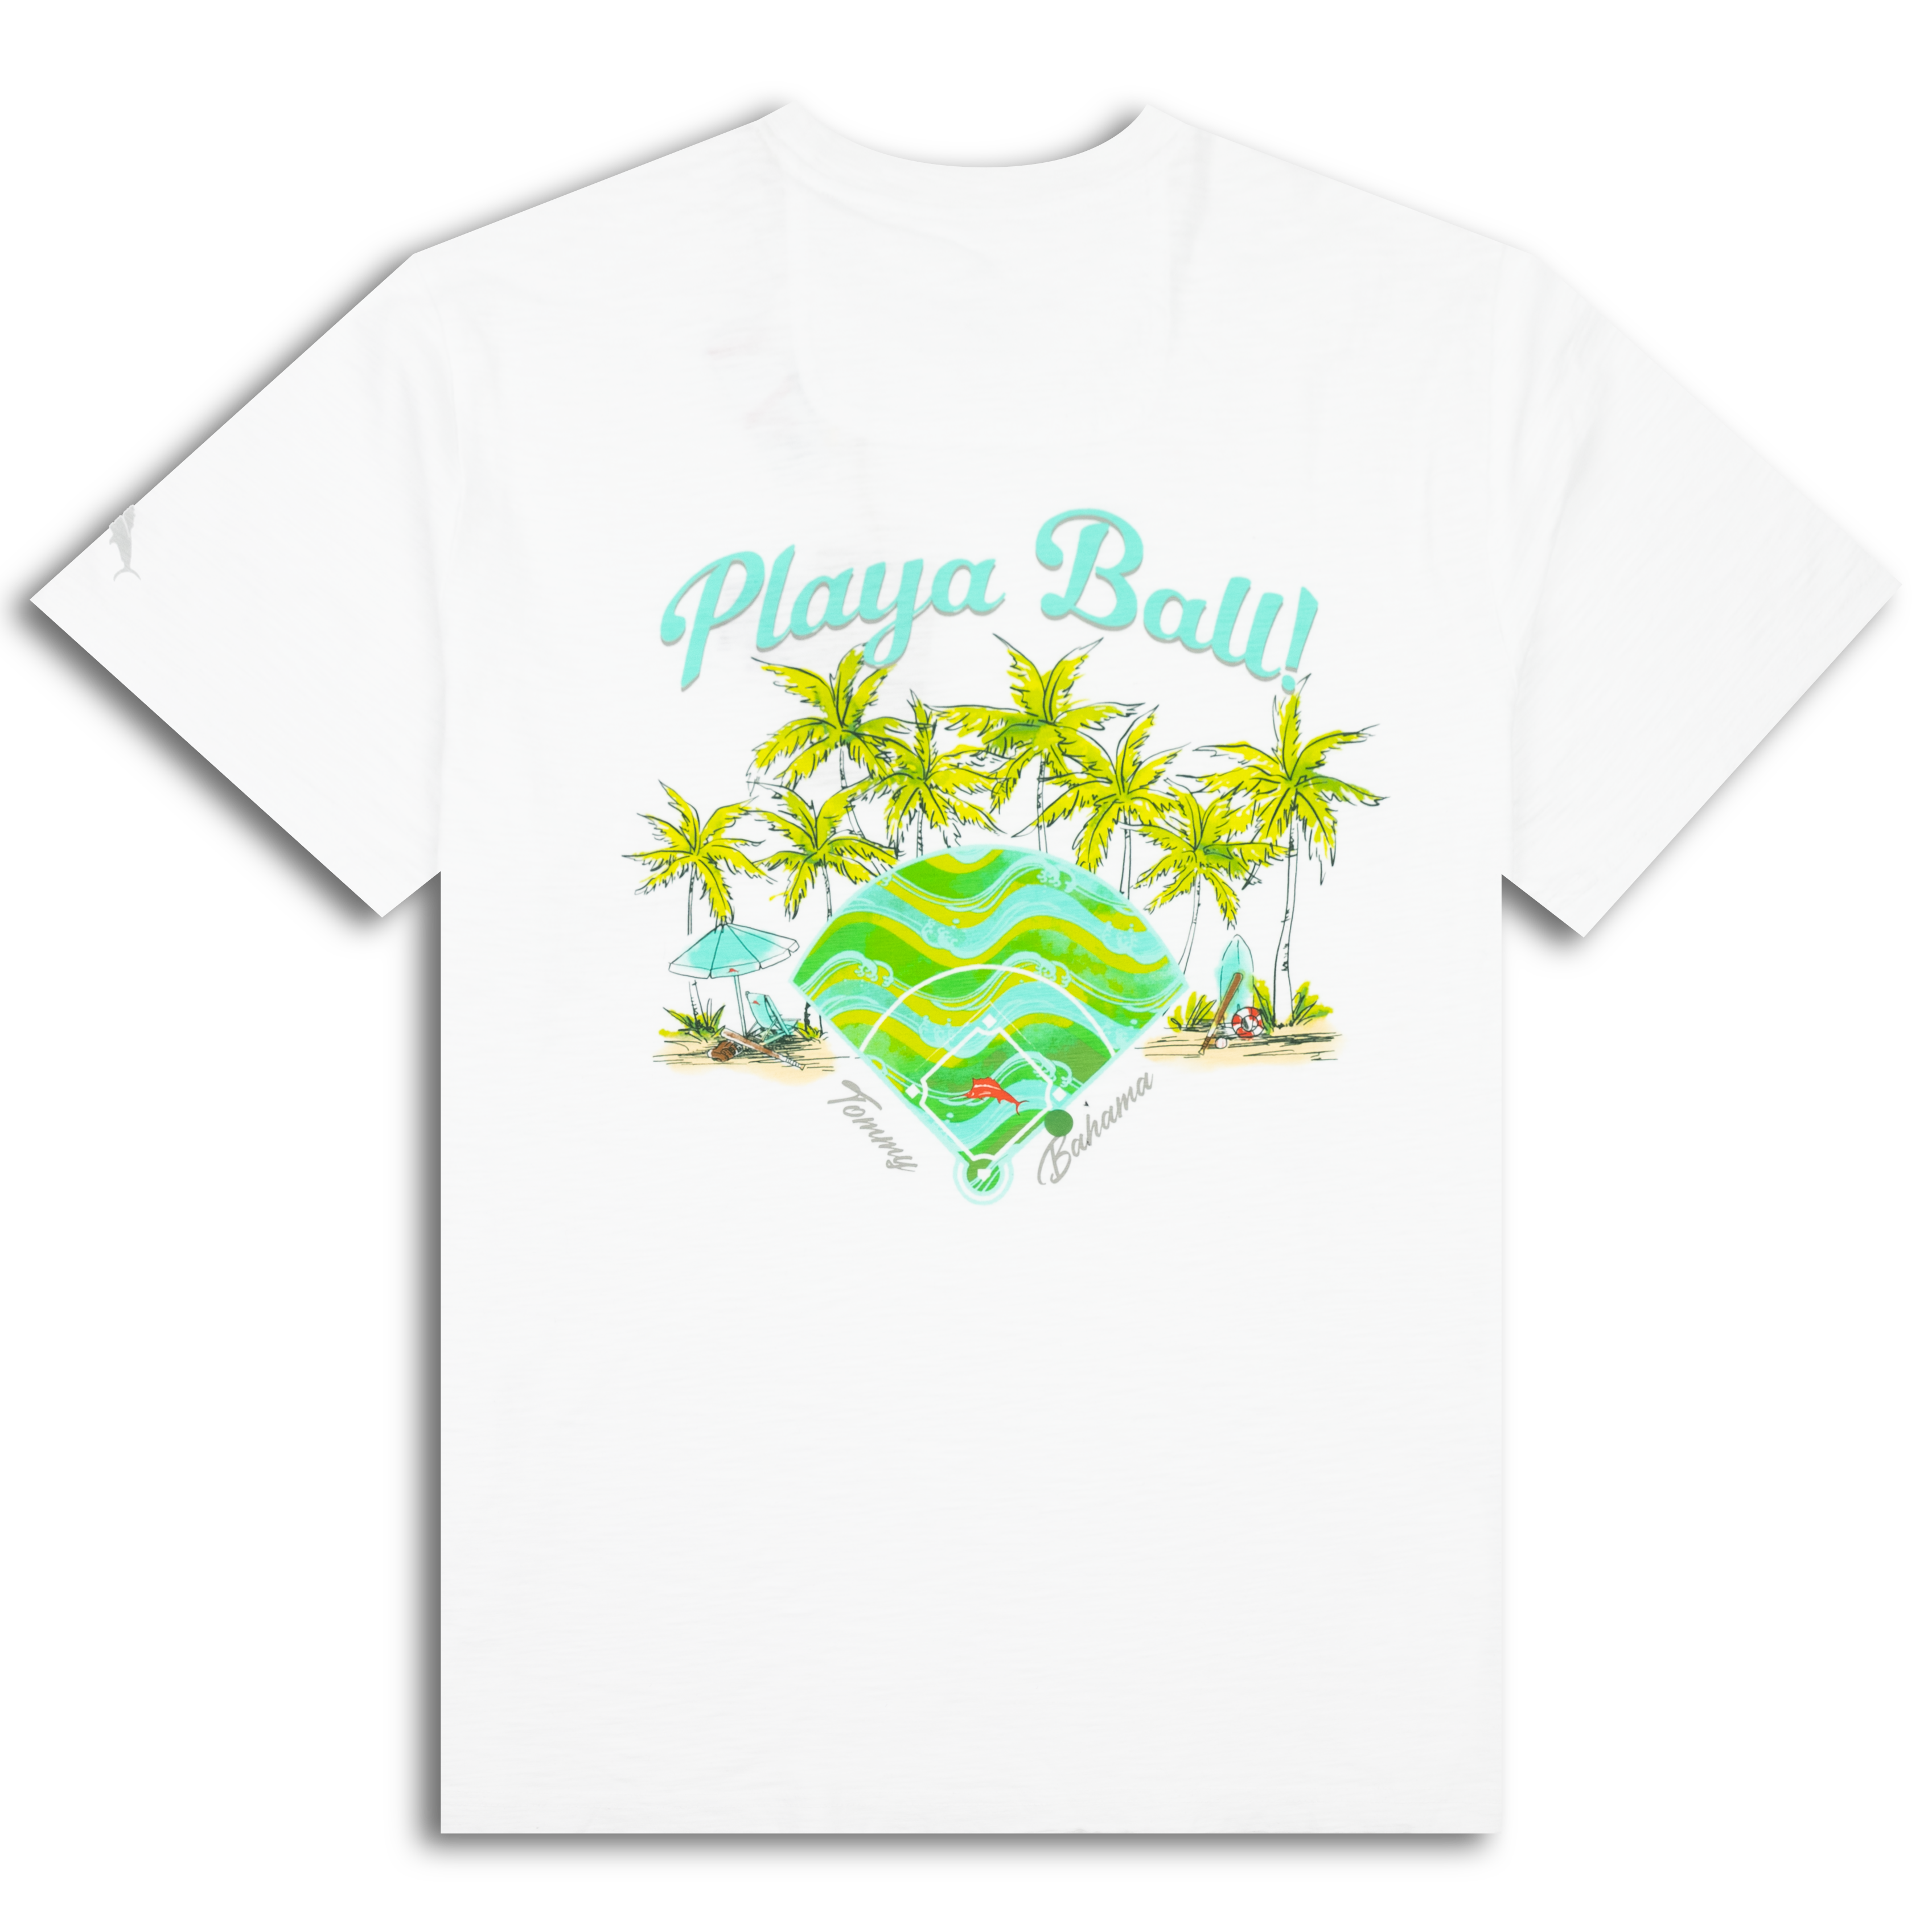 Men's Tommy Bahama White Boston Red Sox Playa Ball T-Shirt Size: Medium